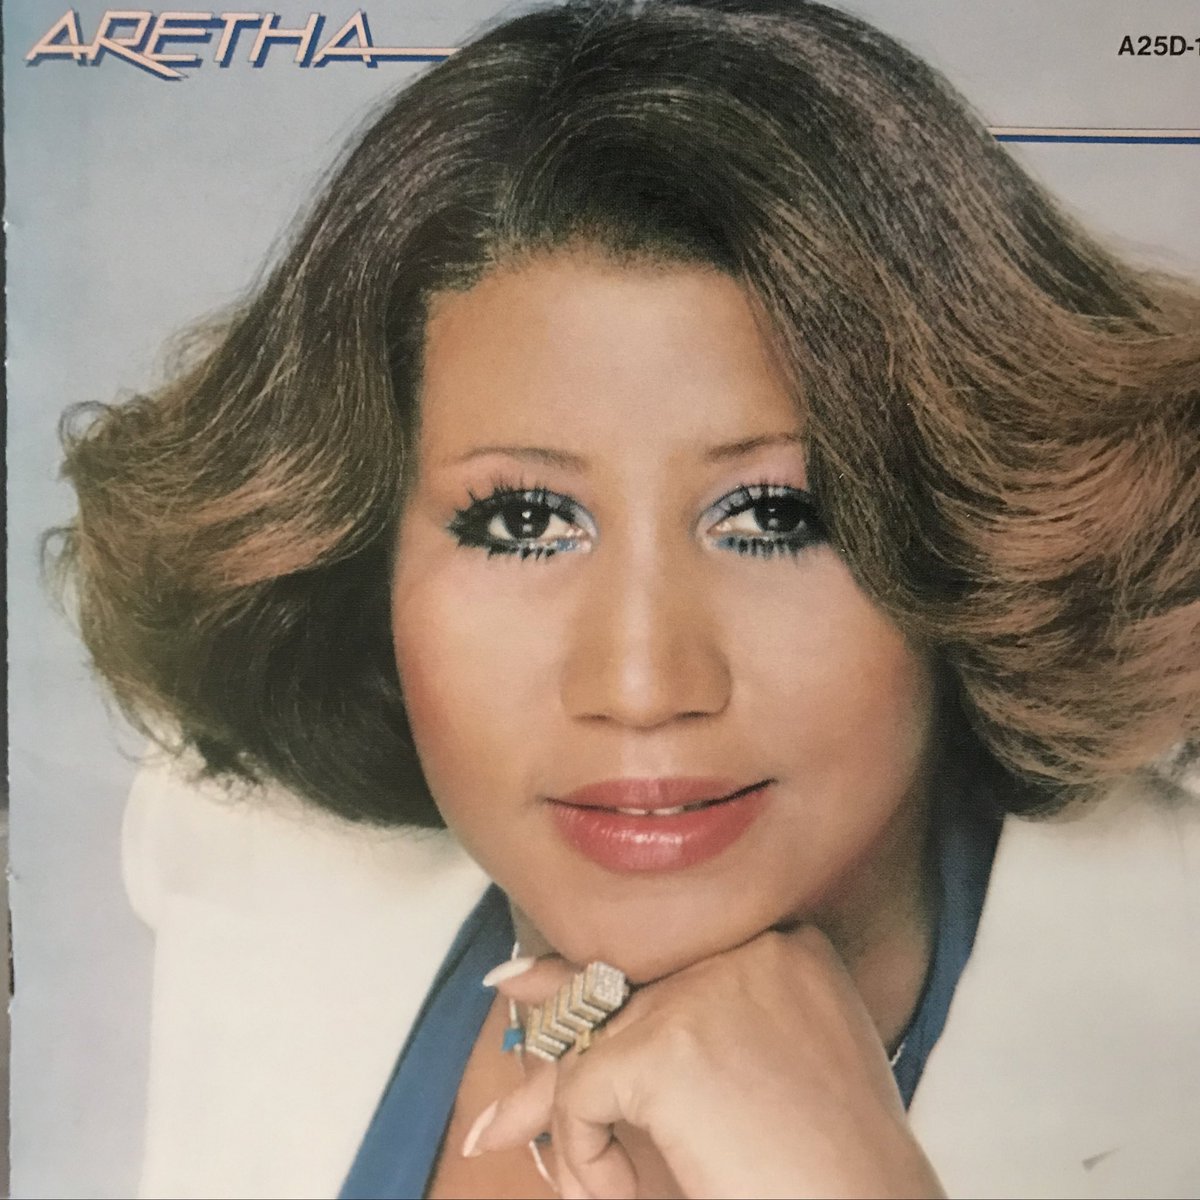 this Week Recommend2️⃣ARETHA FR
ANKLIN Aretha 1988 #soulmusic 
#randb #soul #disco #funk #ballad 
#blackcontemporary #80ssoul